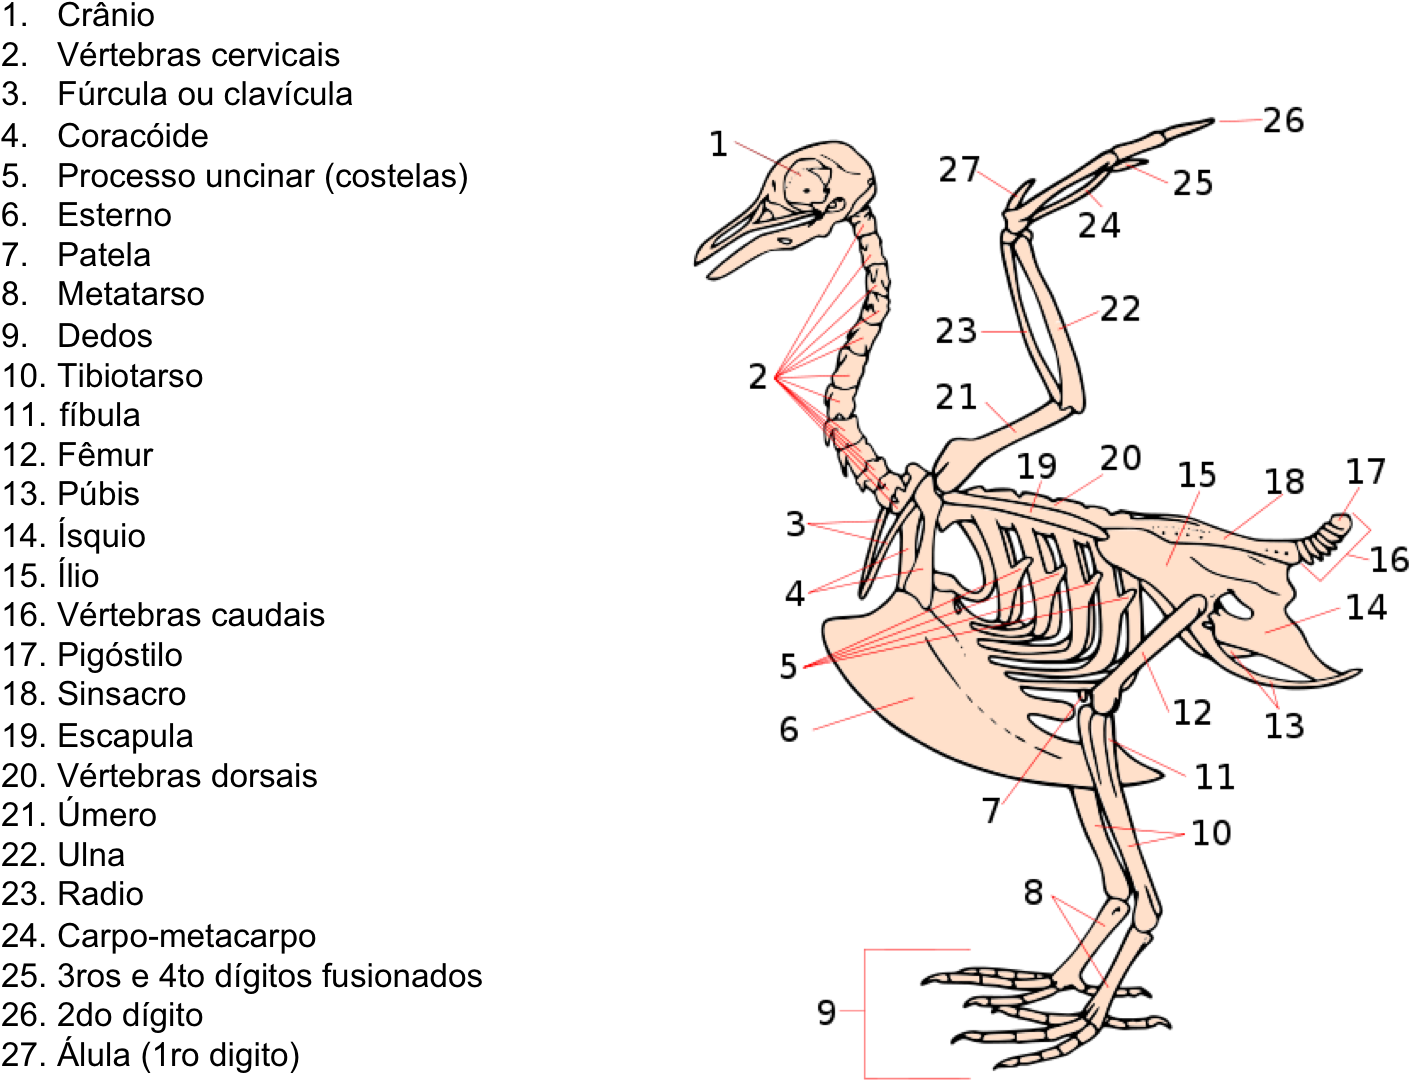 Download Esqueleto Bird Skeleton Png Image With No Background Pngkey Com